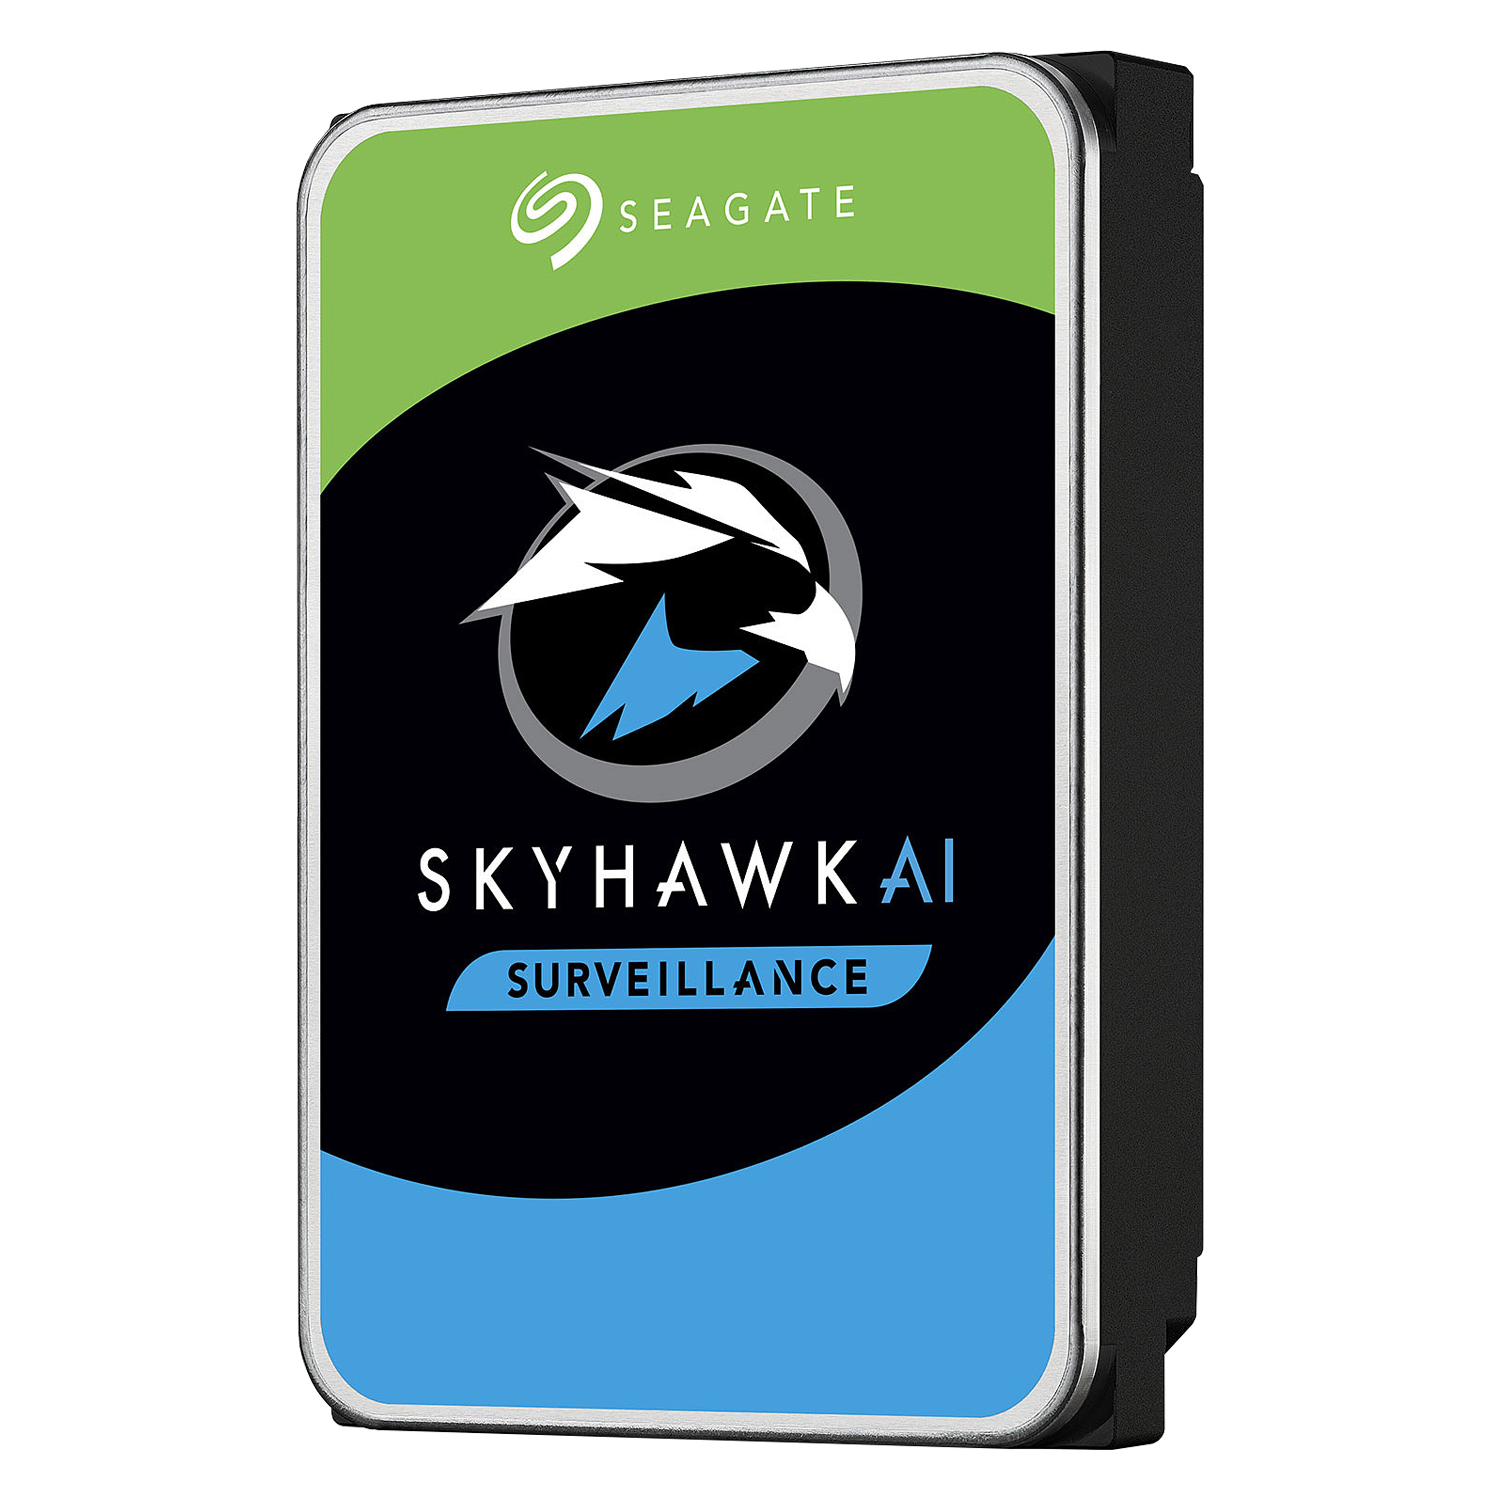 HD Seagate Skyhawk Al Surveillance 12TB / SATA3 / 3.5 / 7200RPM - (ST12000VE001)
